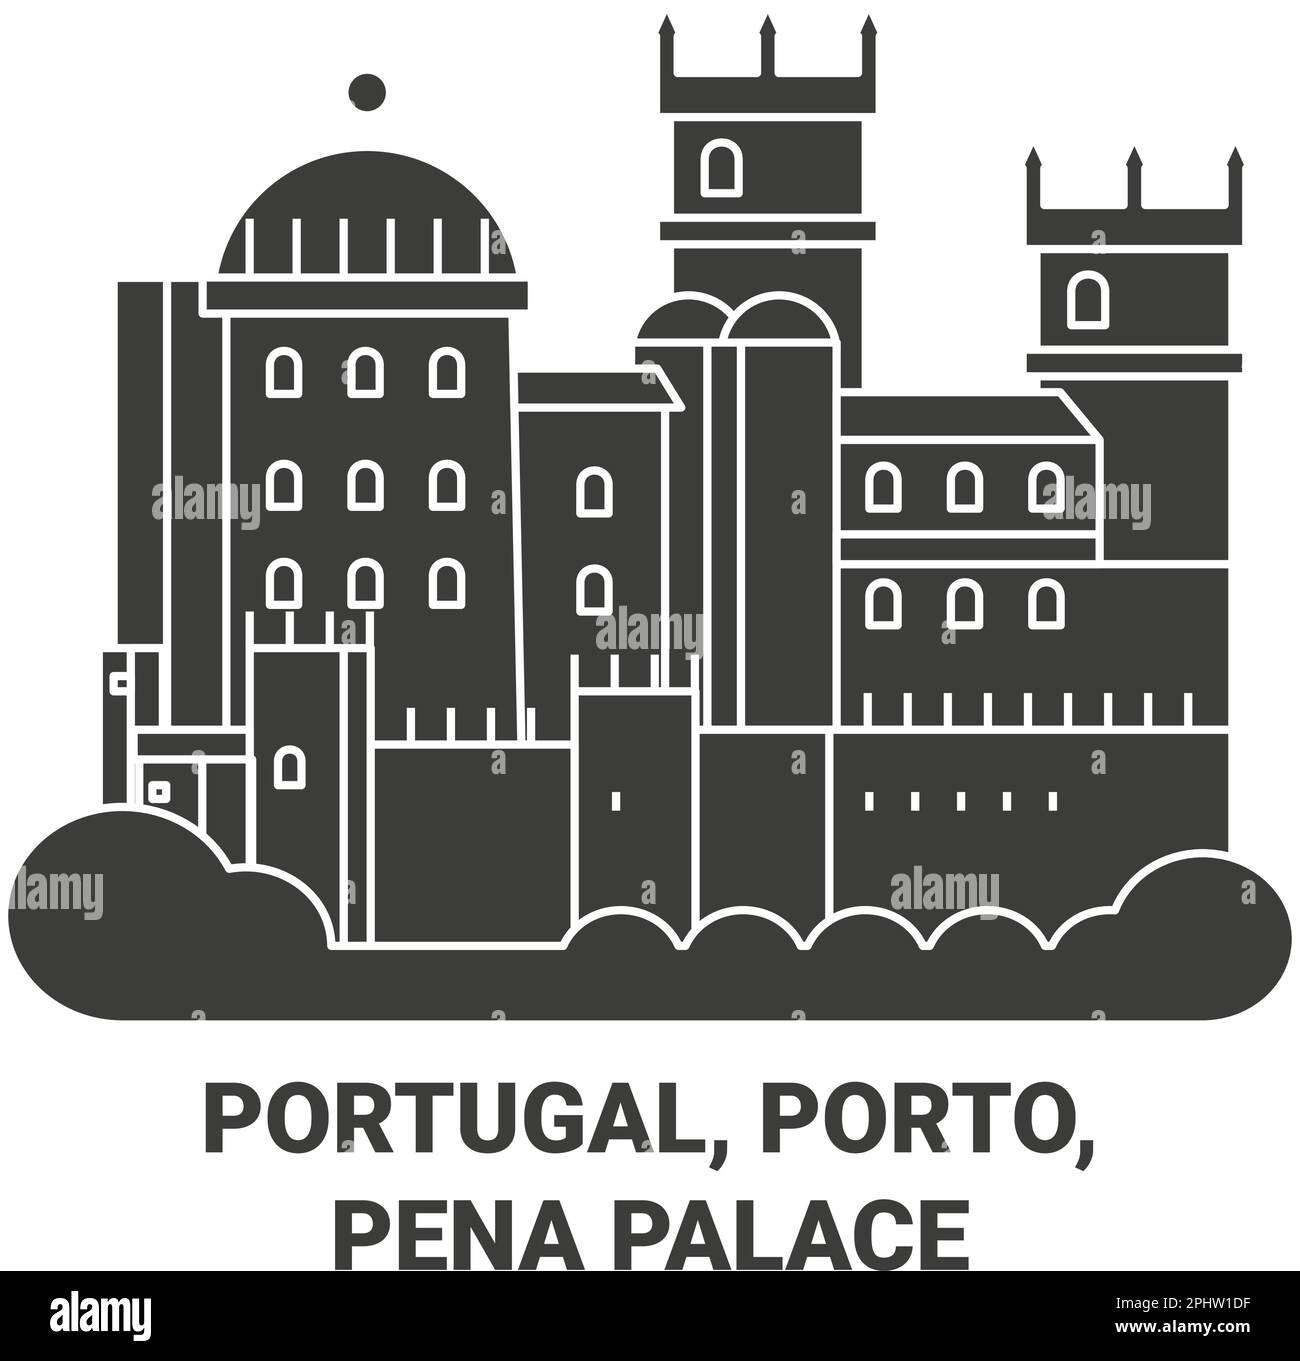 Portugal, Porto, Pena Palace travel landmark vector illustration Stock Vector